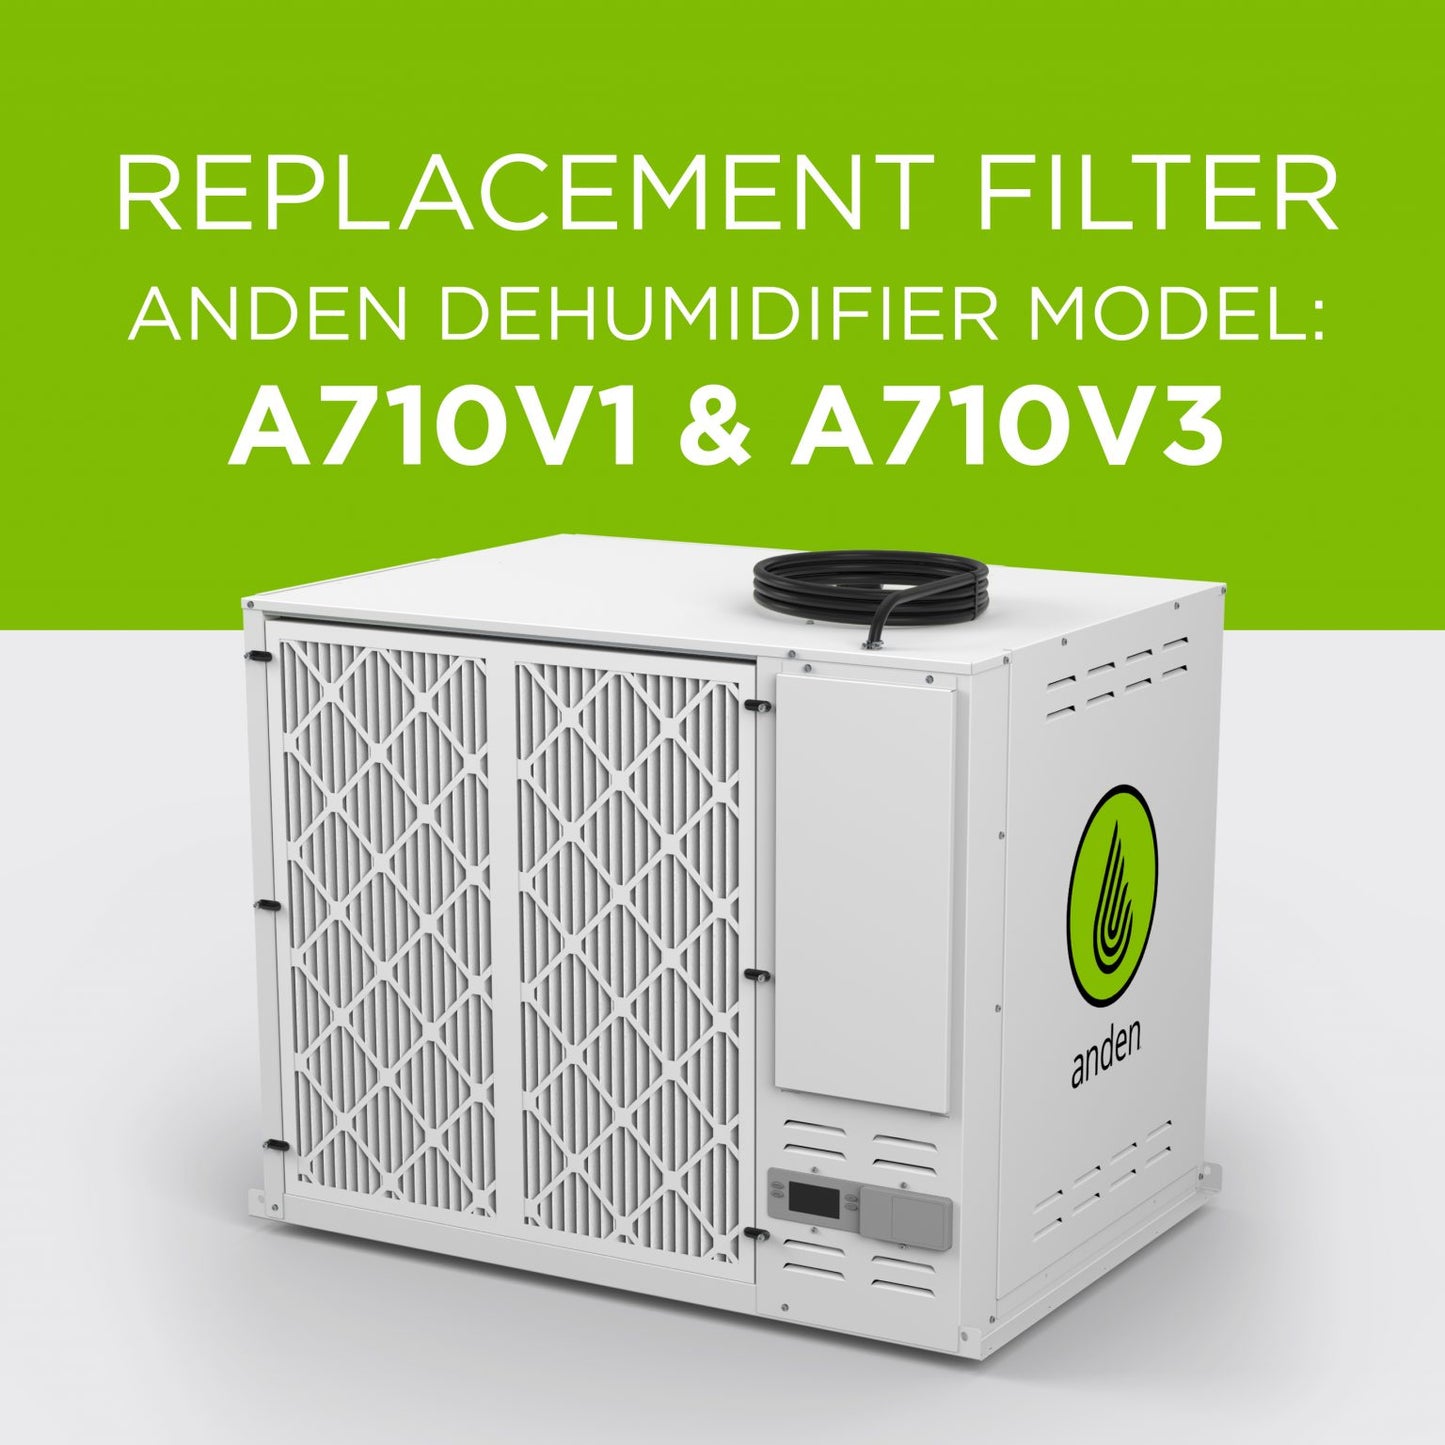 MERV 11 Replacement Filter (6 Pack) for Model A710V1 & A710V3